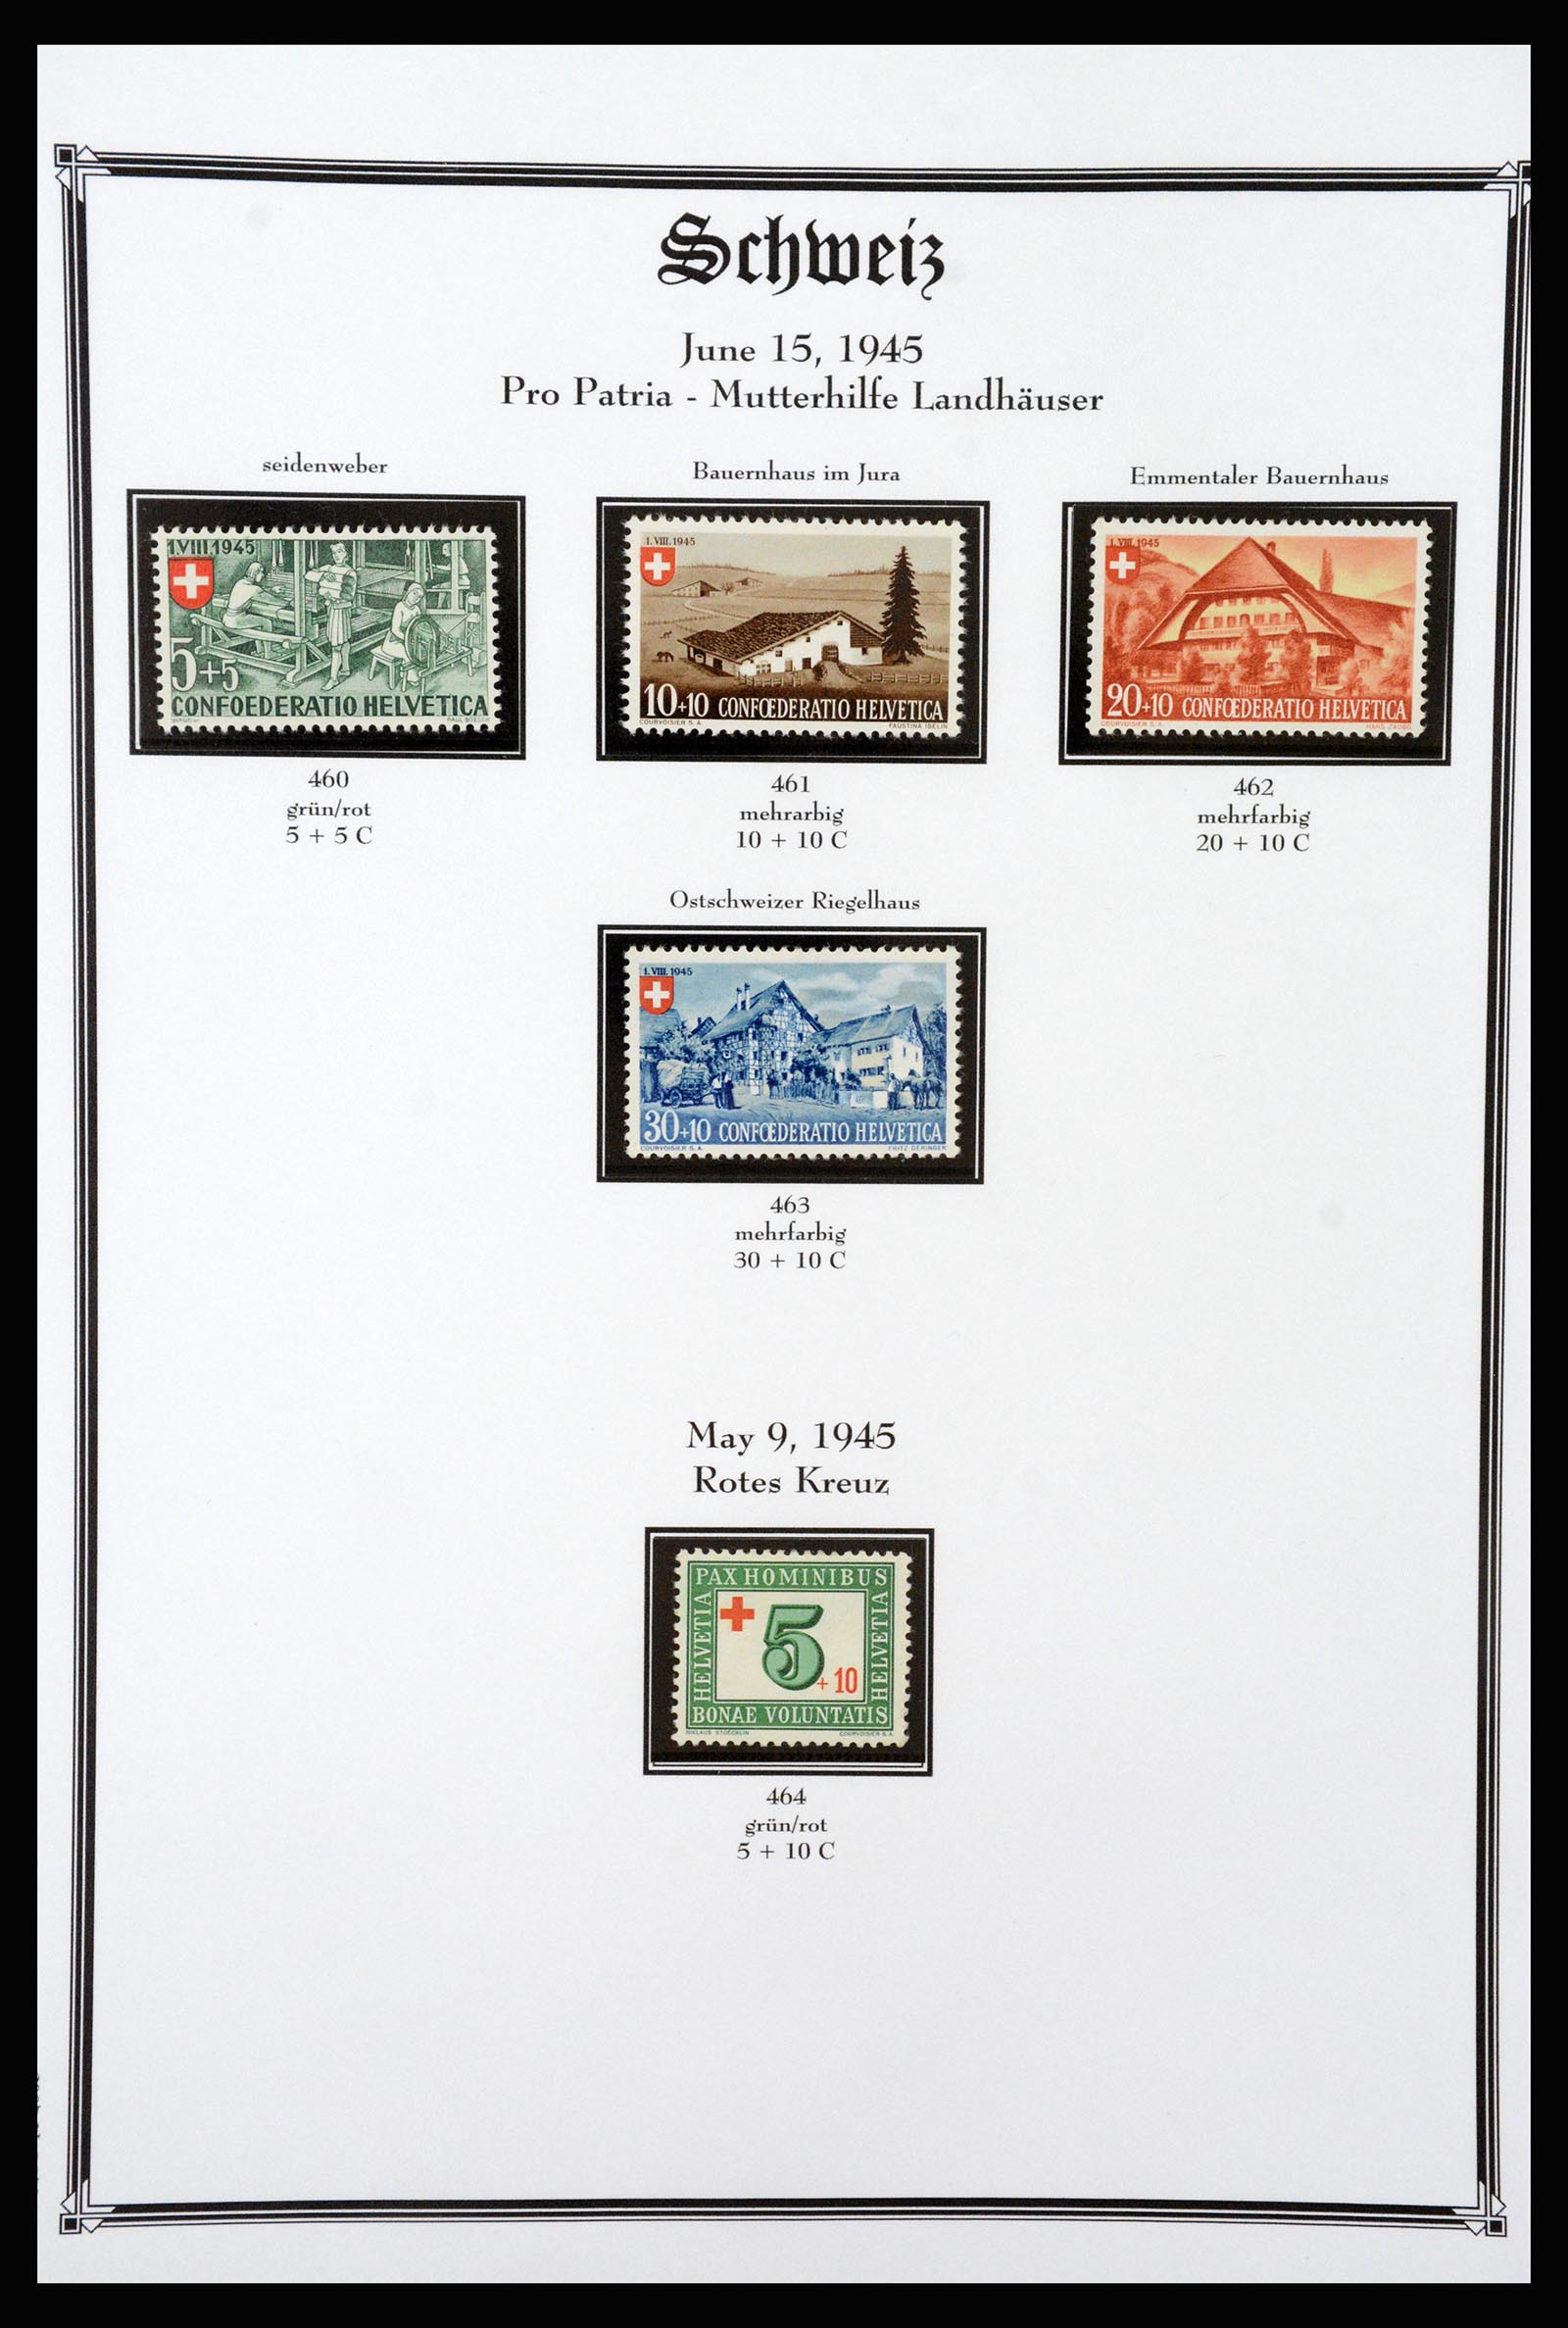 37159 084 - Stamp collection 37159 Switzerland 1862-2000.